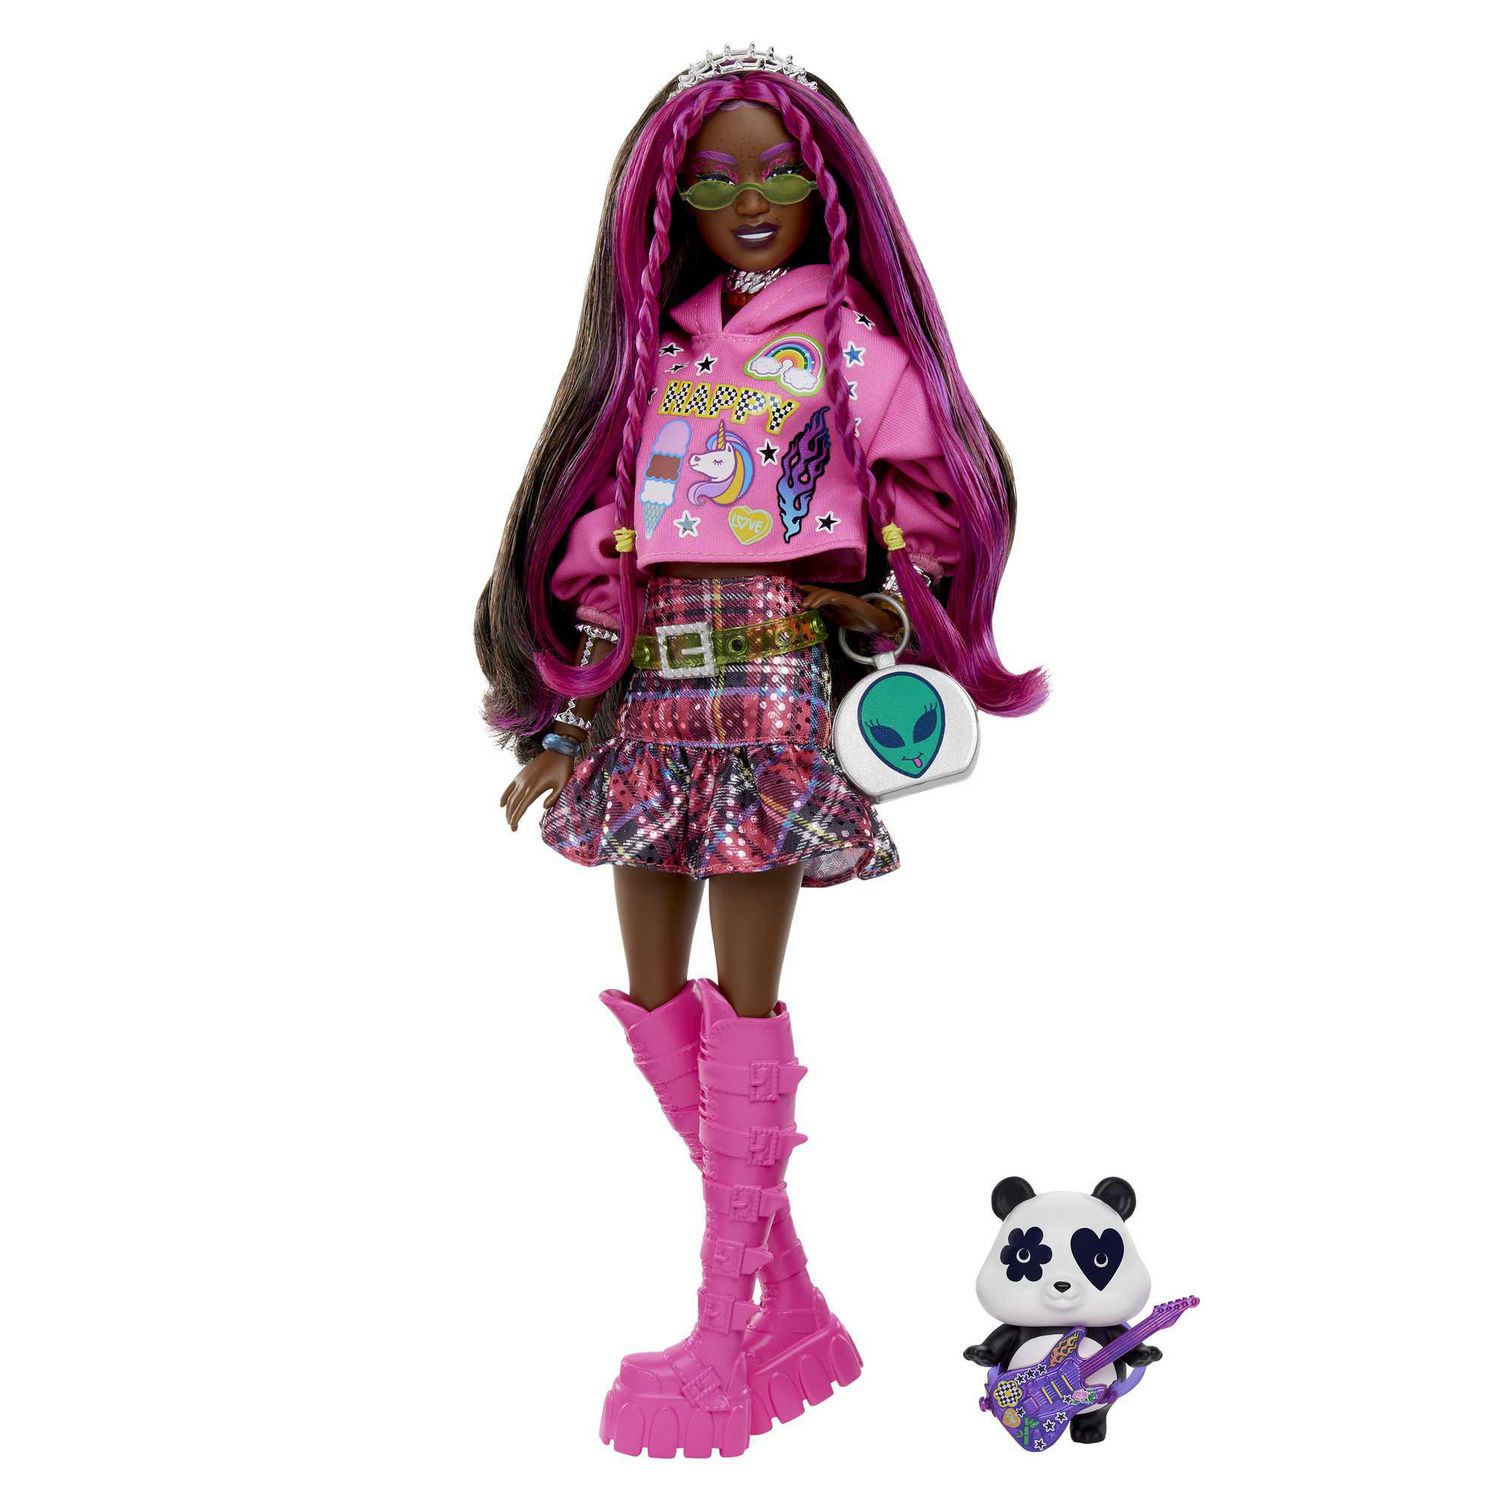 Barbie Extras on sale at Walmart! : r/Barbie